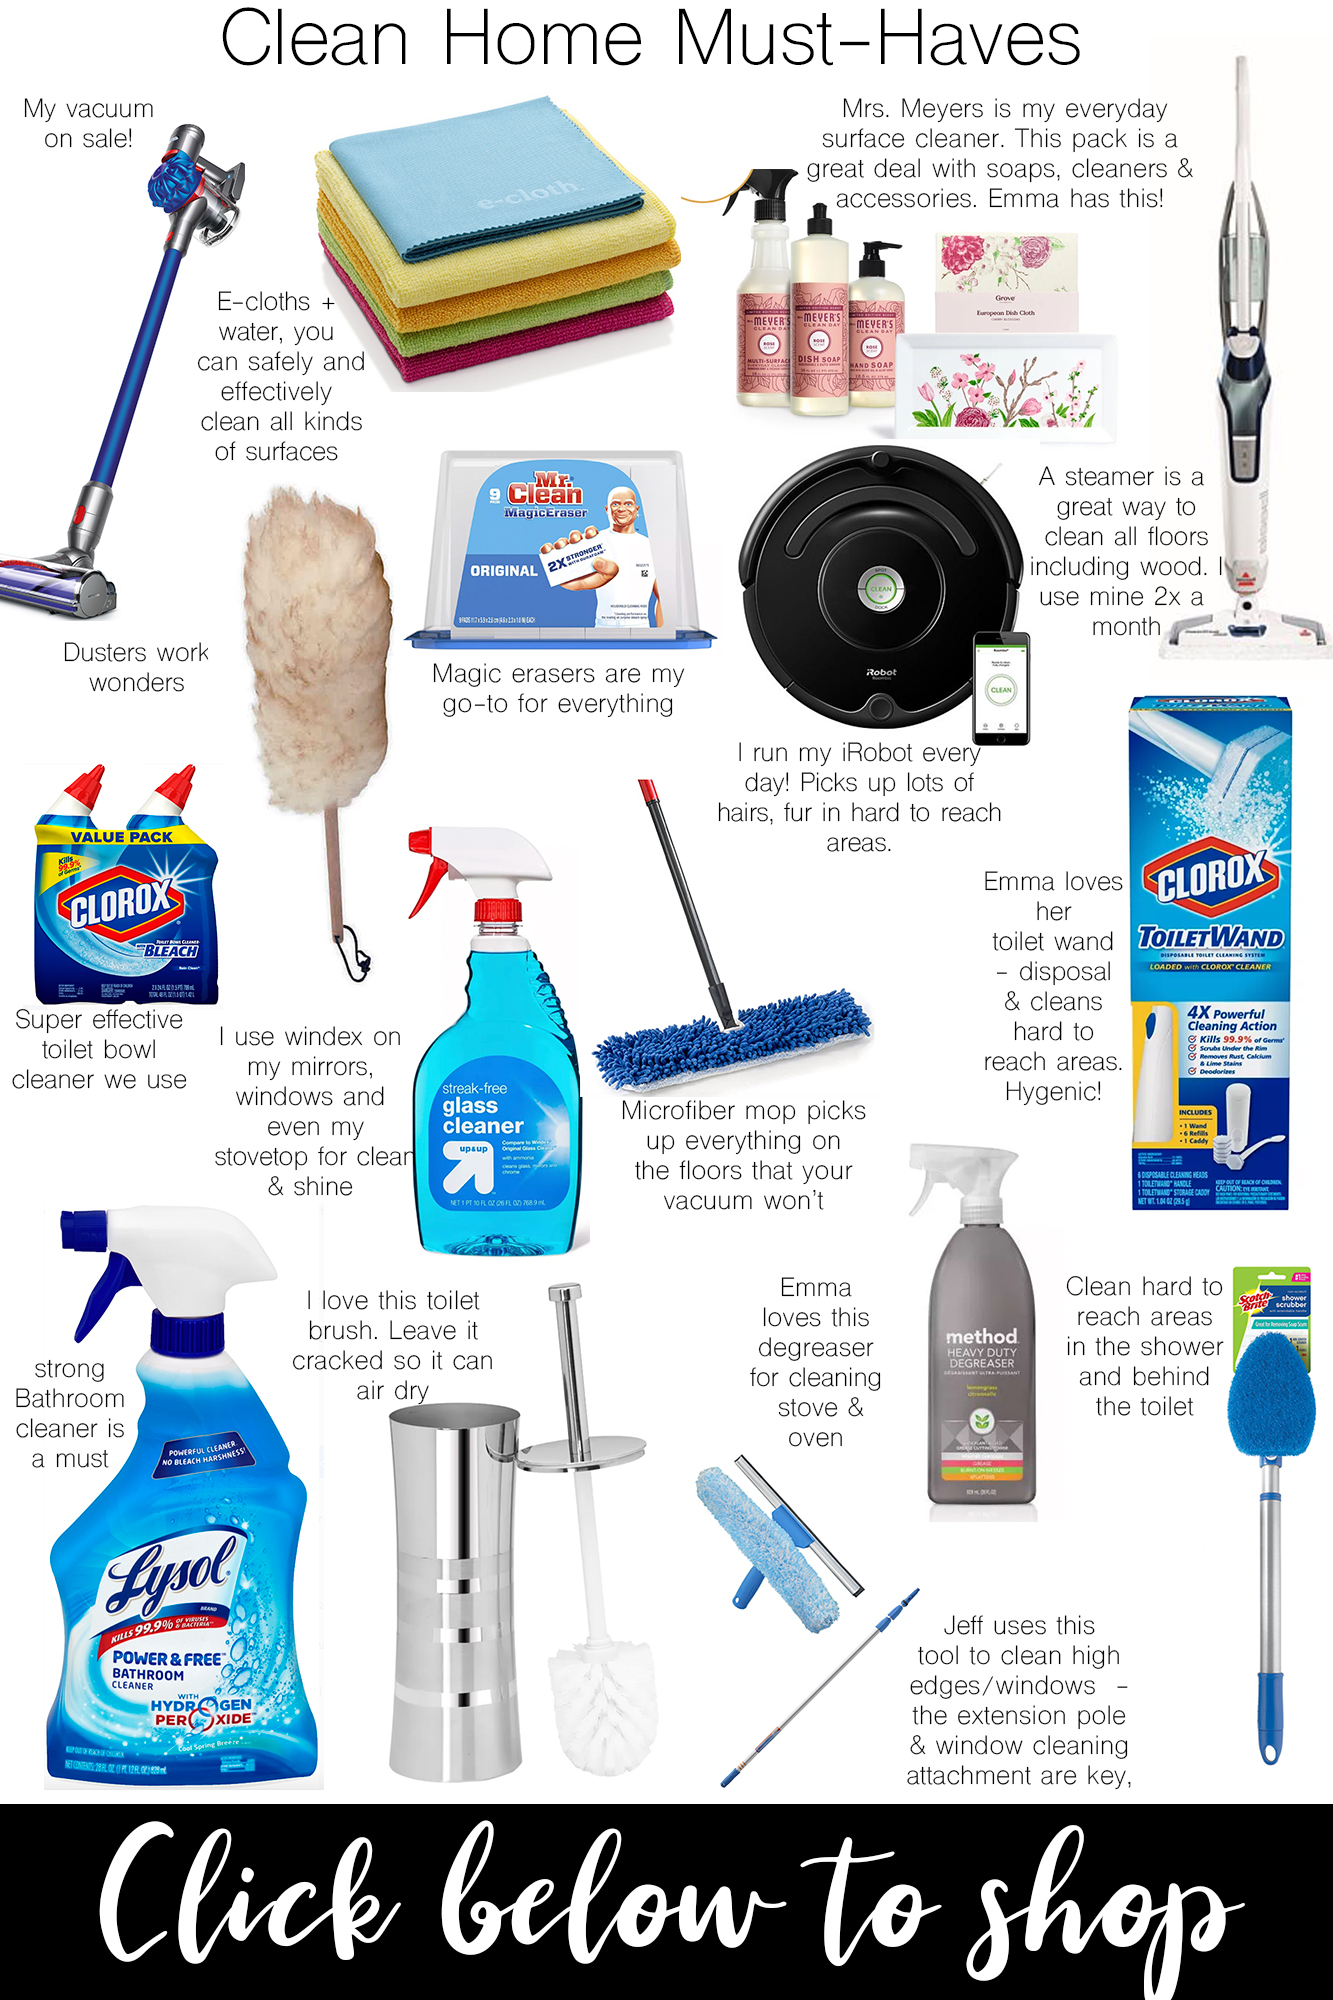 https://kristywicks.com/wp-content/uploads/2020/04/Clean-Home-Must-Haves-Kristy-Wicks-2020.jpg